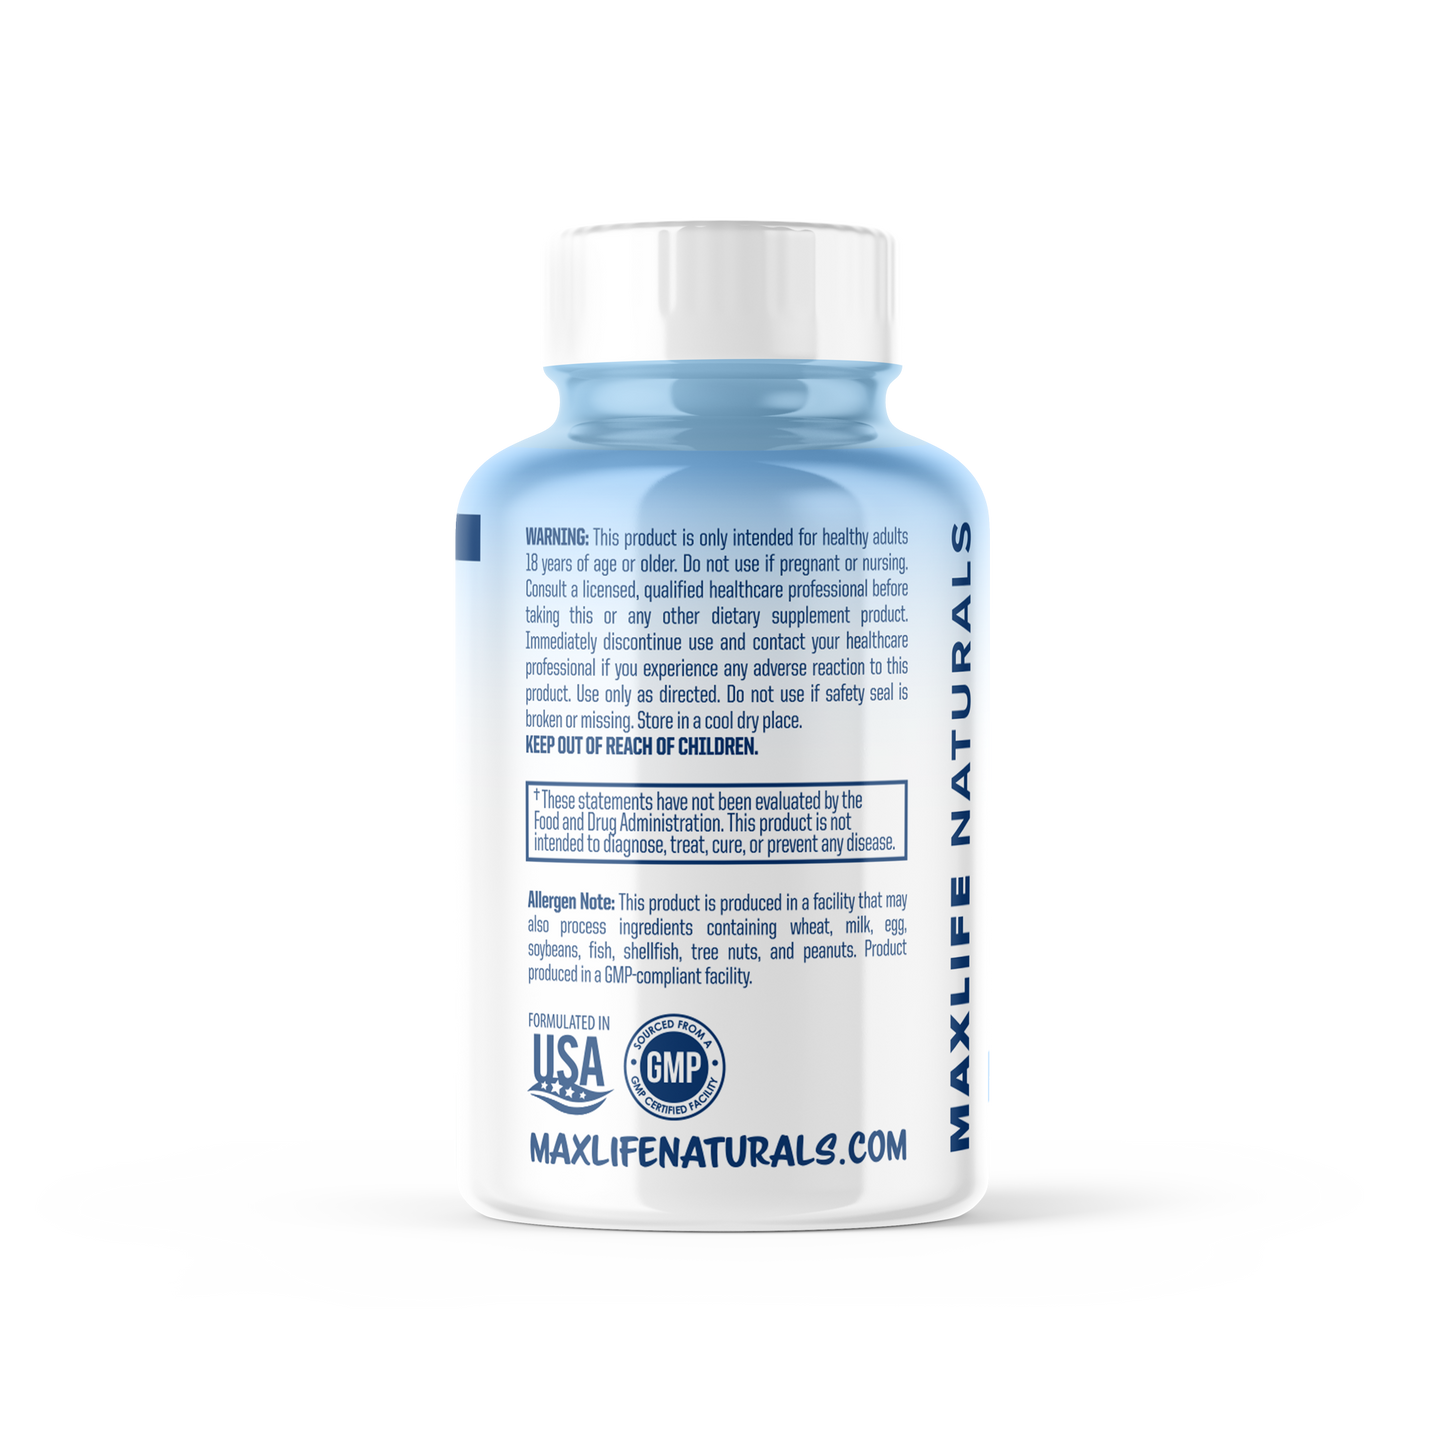 BPC - 157 - Body Protection Compound Peptide 500mcg